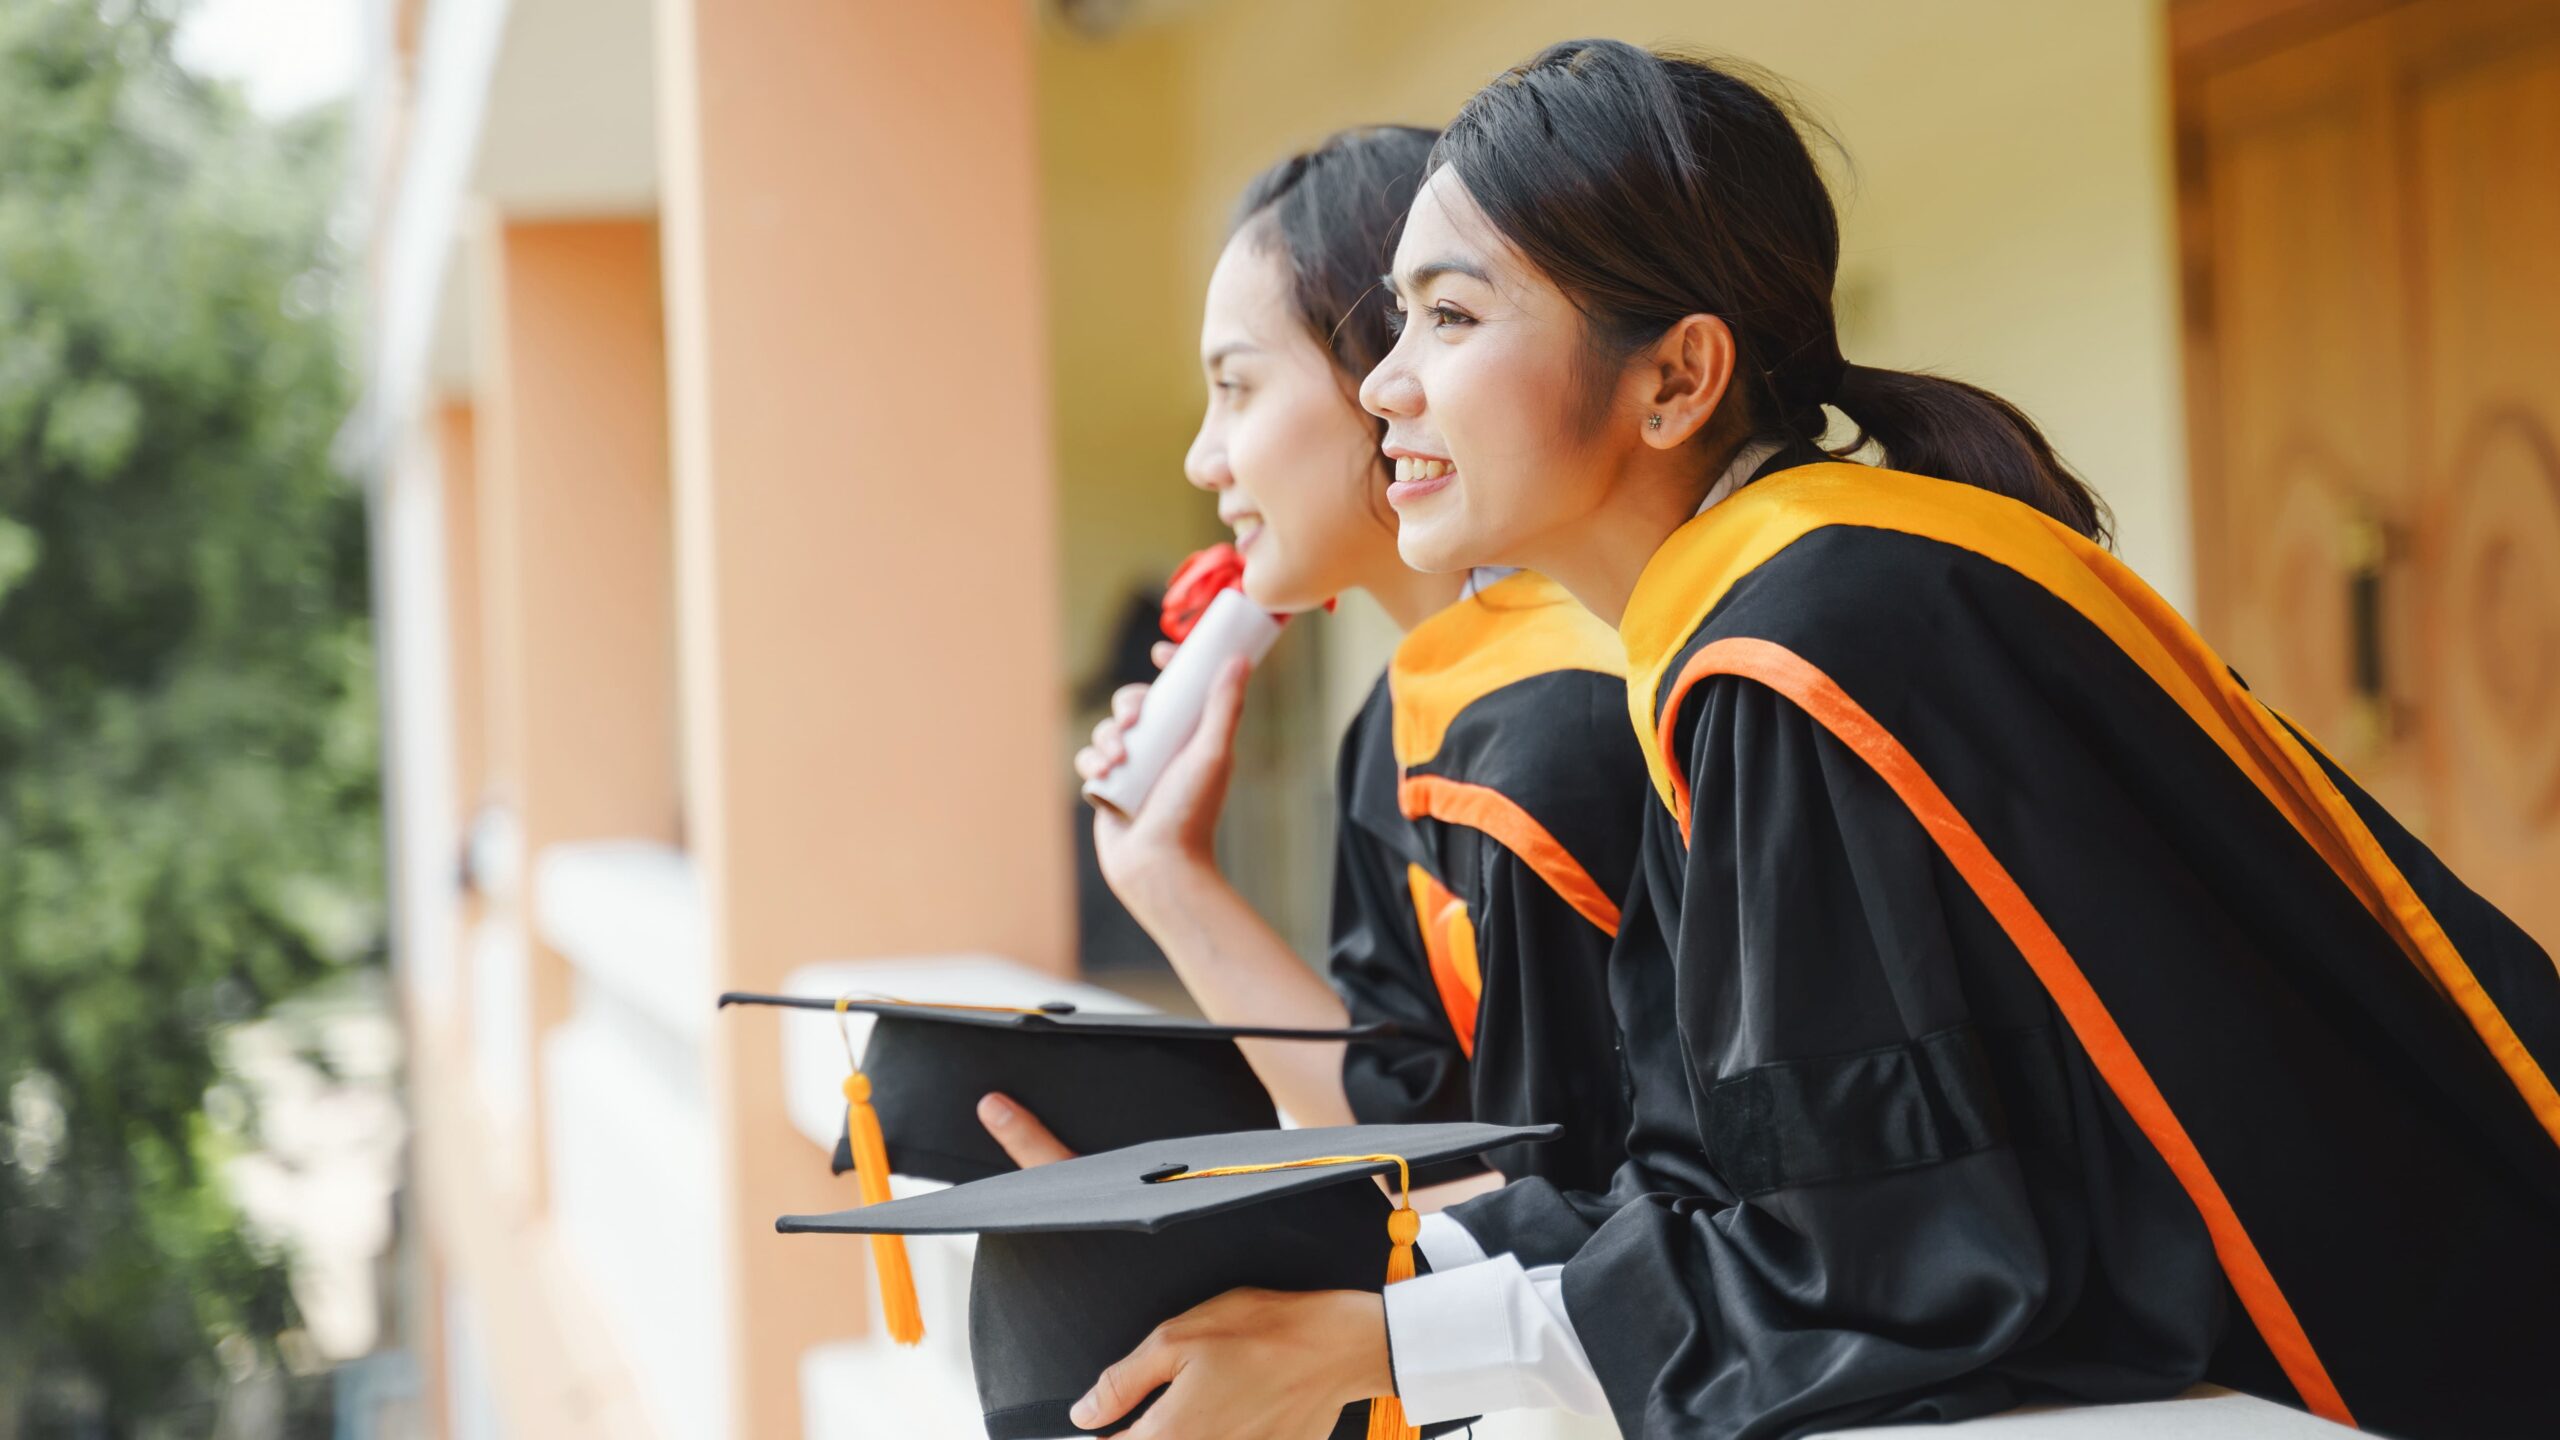 asian-university-graduates-graduation-gown-mortarboard-cap-with-degree-certificate-hand-celebrating-education-achievement-commencement-ceremony-congratulations-graduations (1)